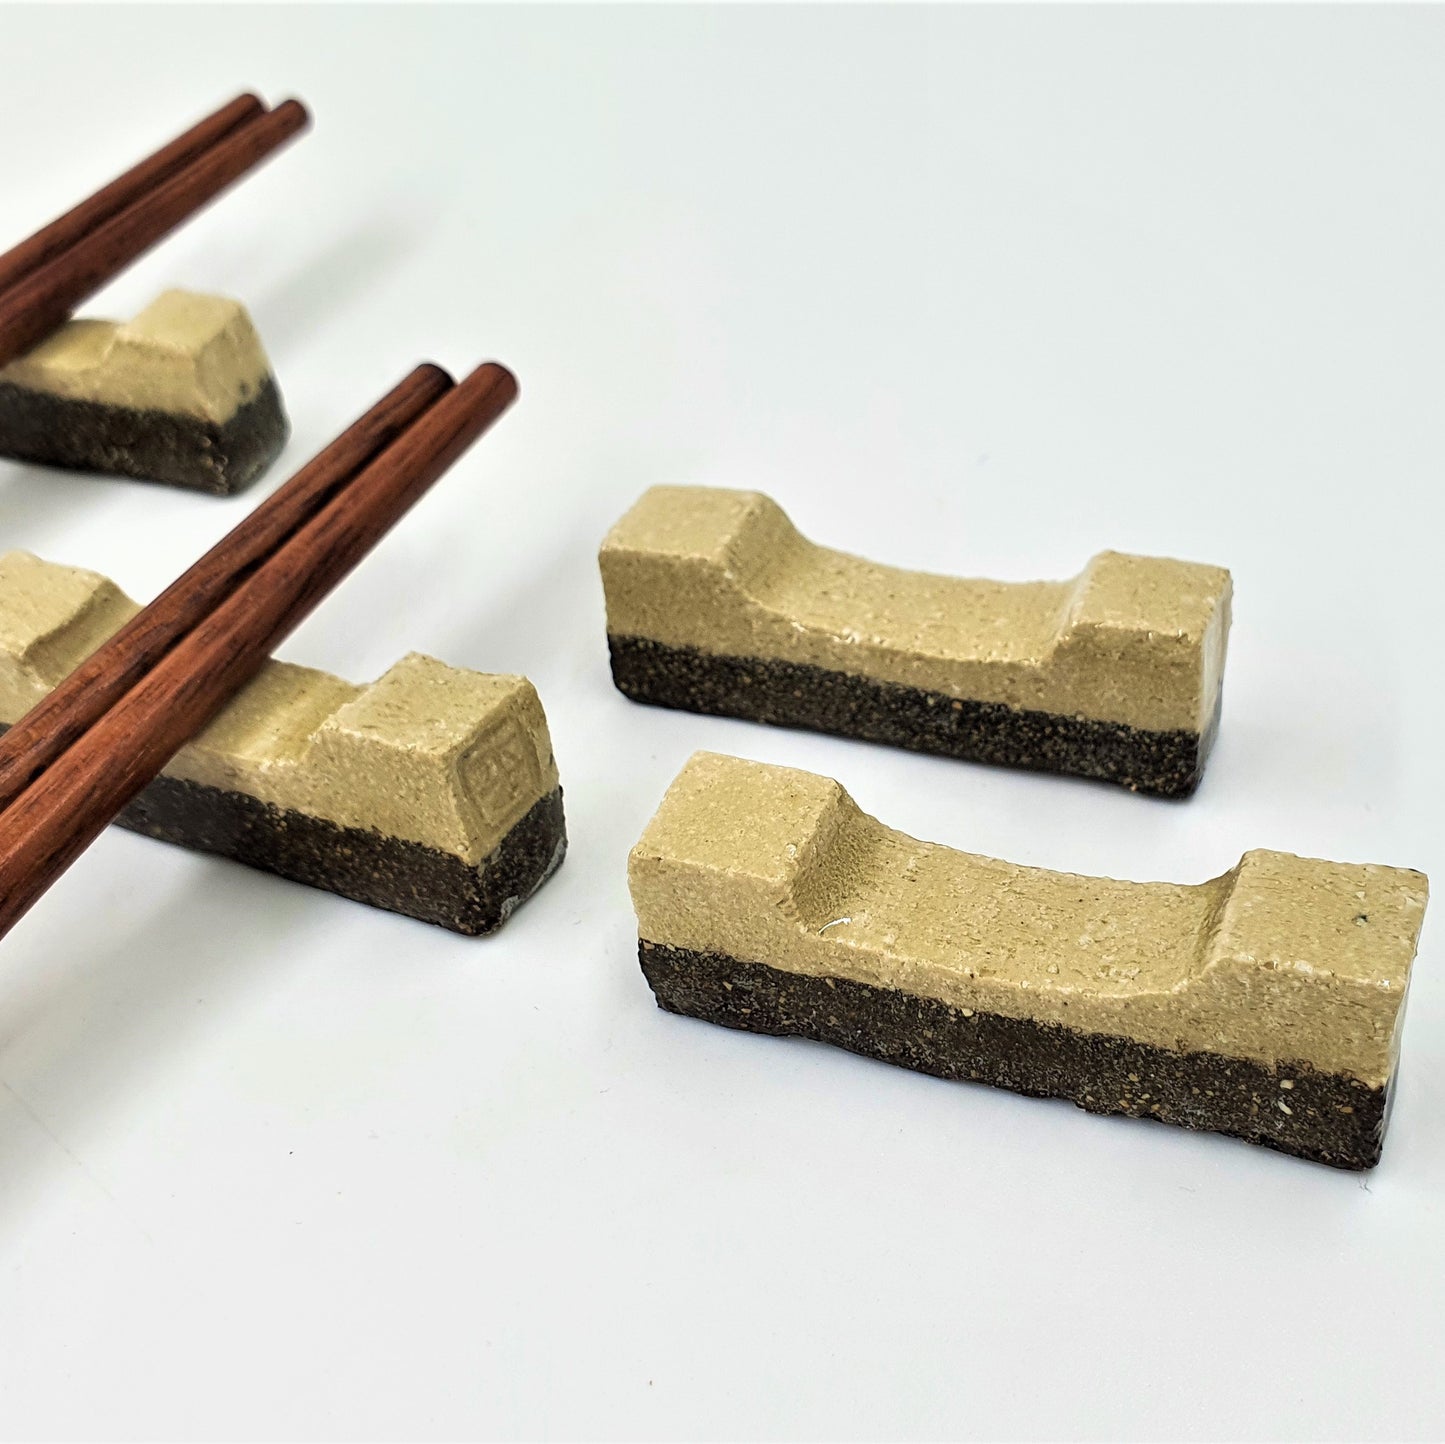 Chocolatte Chopsticks Rests (set of 6) with complimentary chopsticks